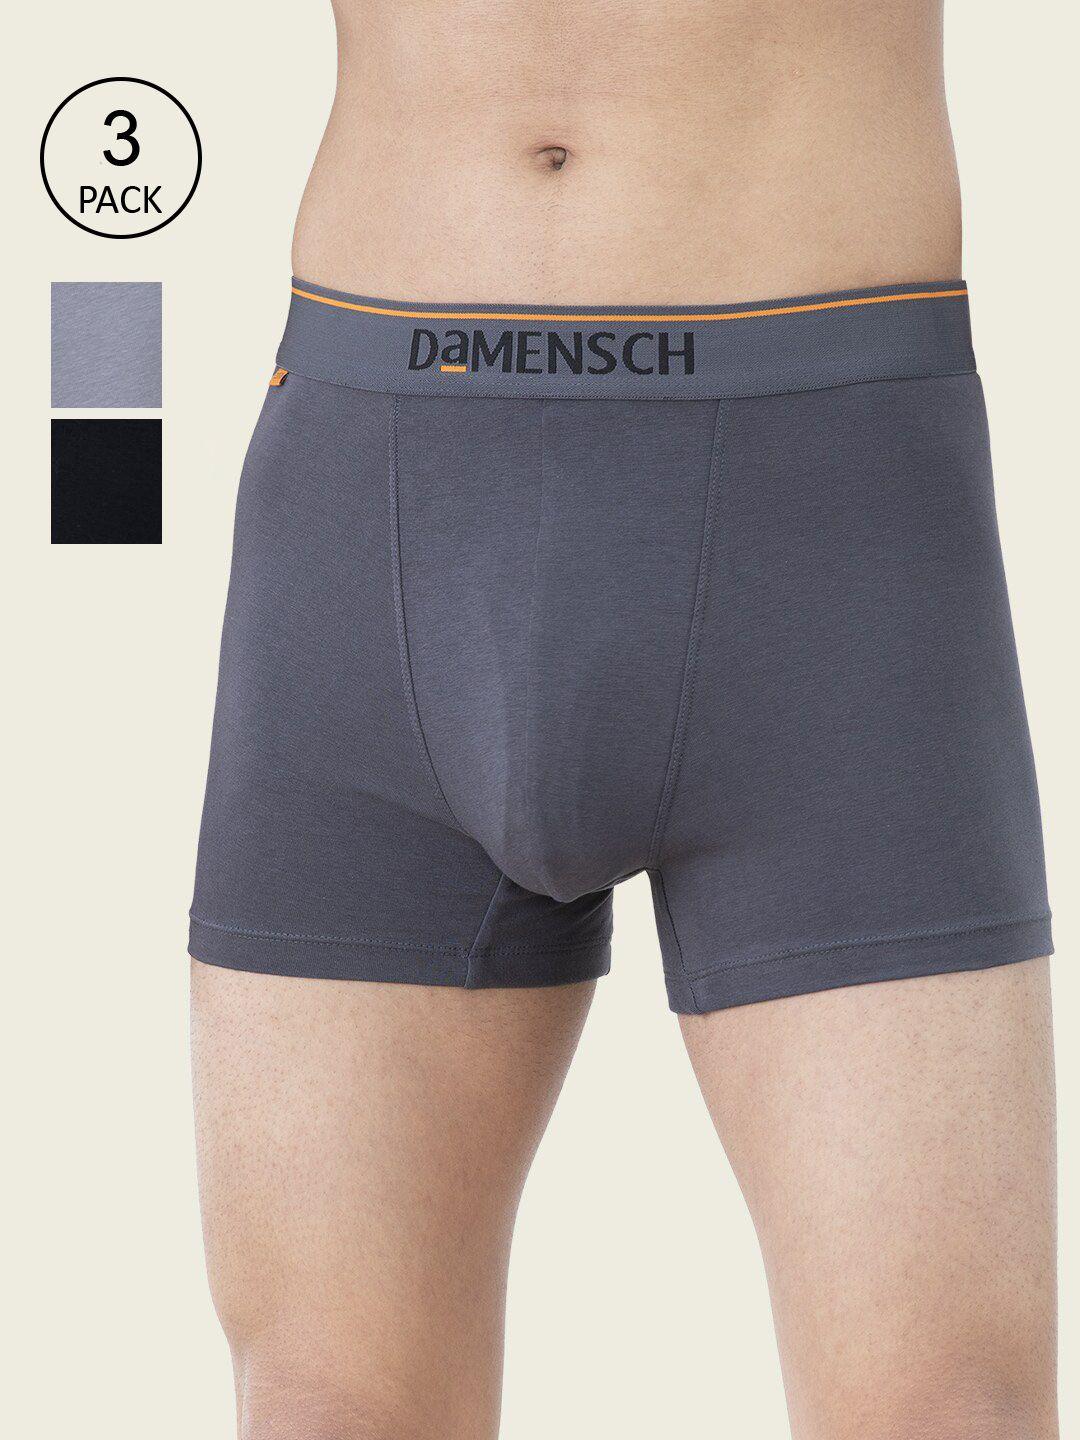 damensch men pack of 3 deo-cotton anti-bacterial moisture-free trunks